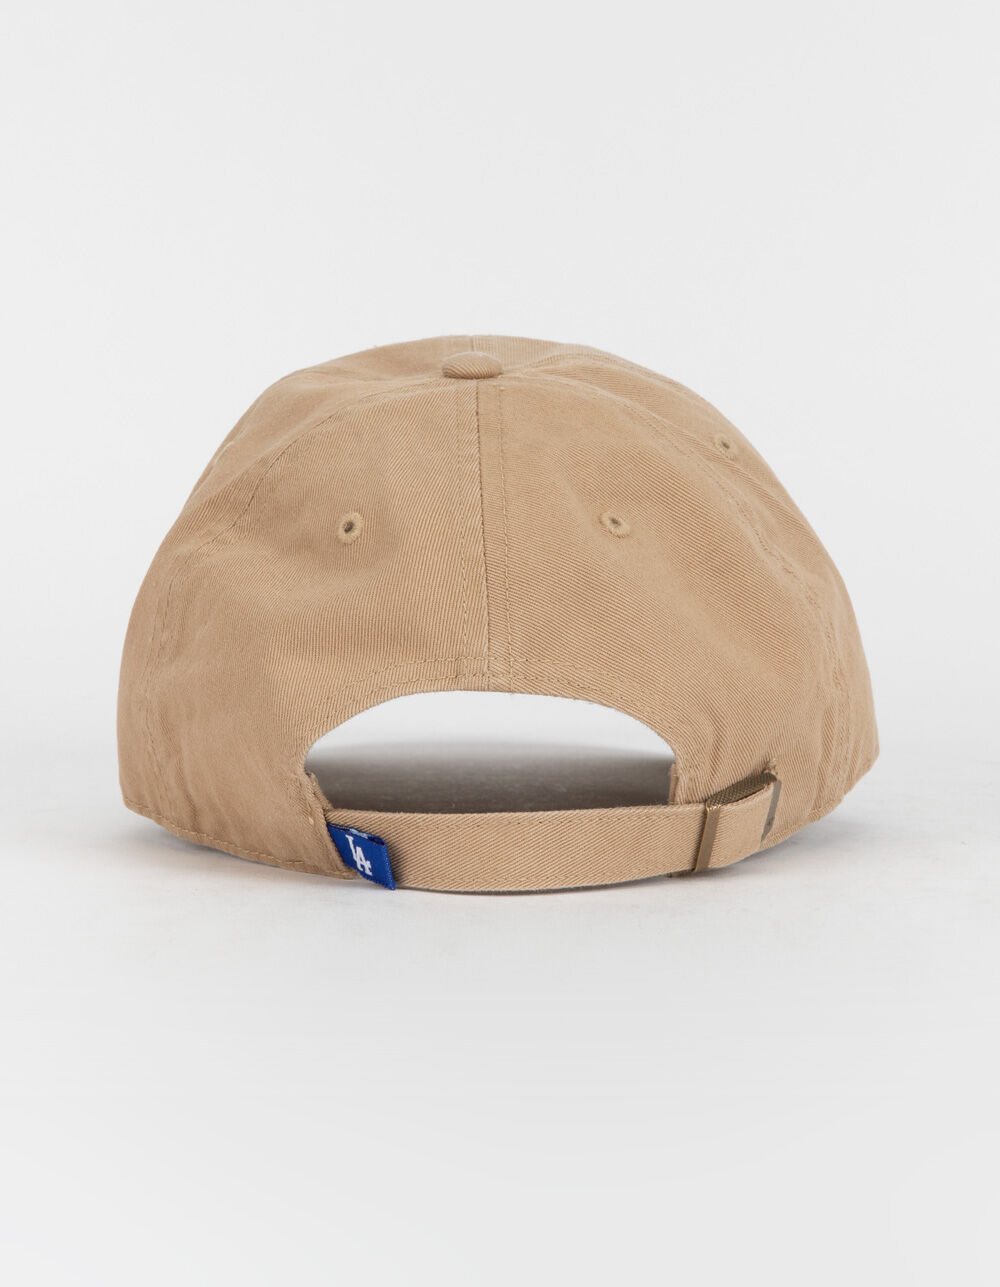 Los Angeles Dodgers 47 Brand White Khaki Clean Up Adjustable Hat